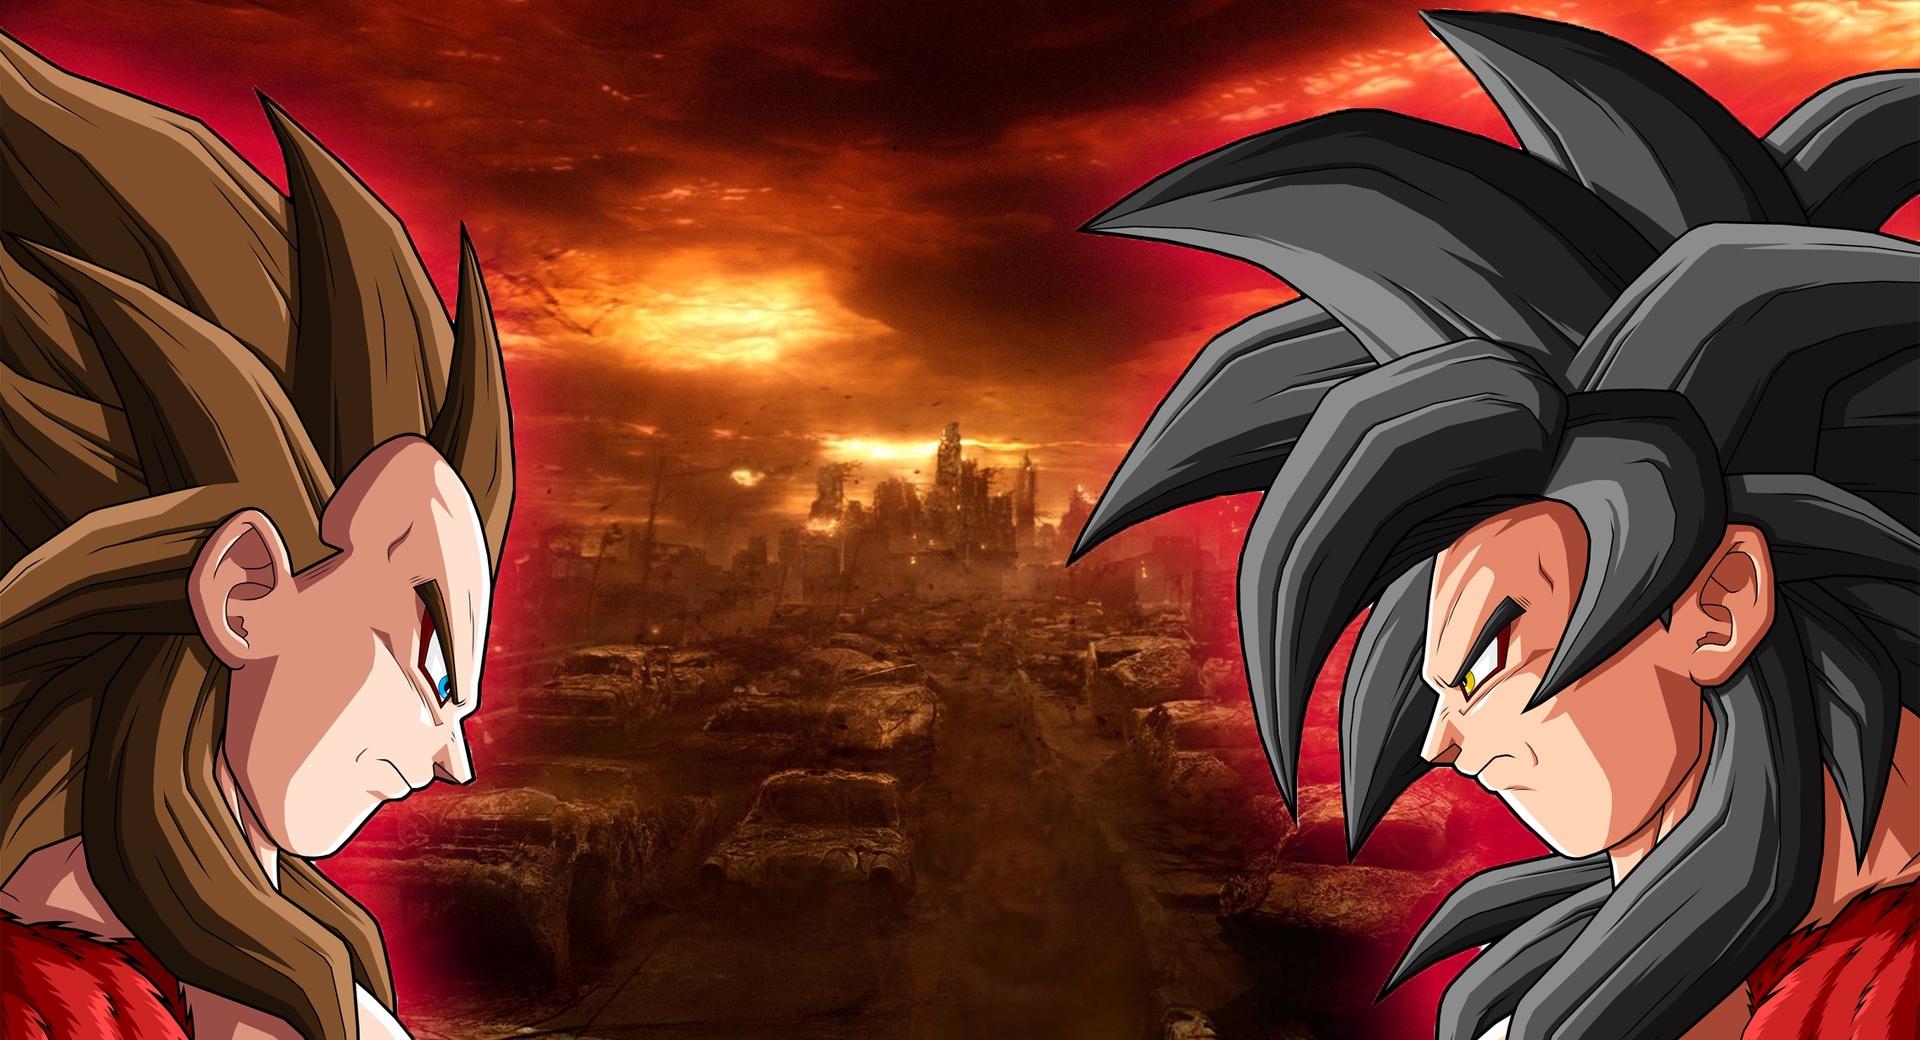 DBZ SS4 Goku vs Vegeta at 1024 x 768 size wallpapers HD quality